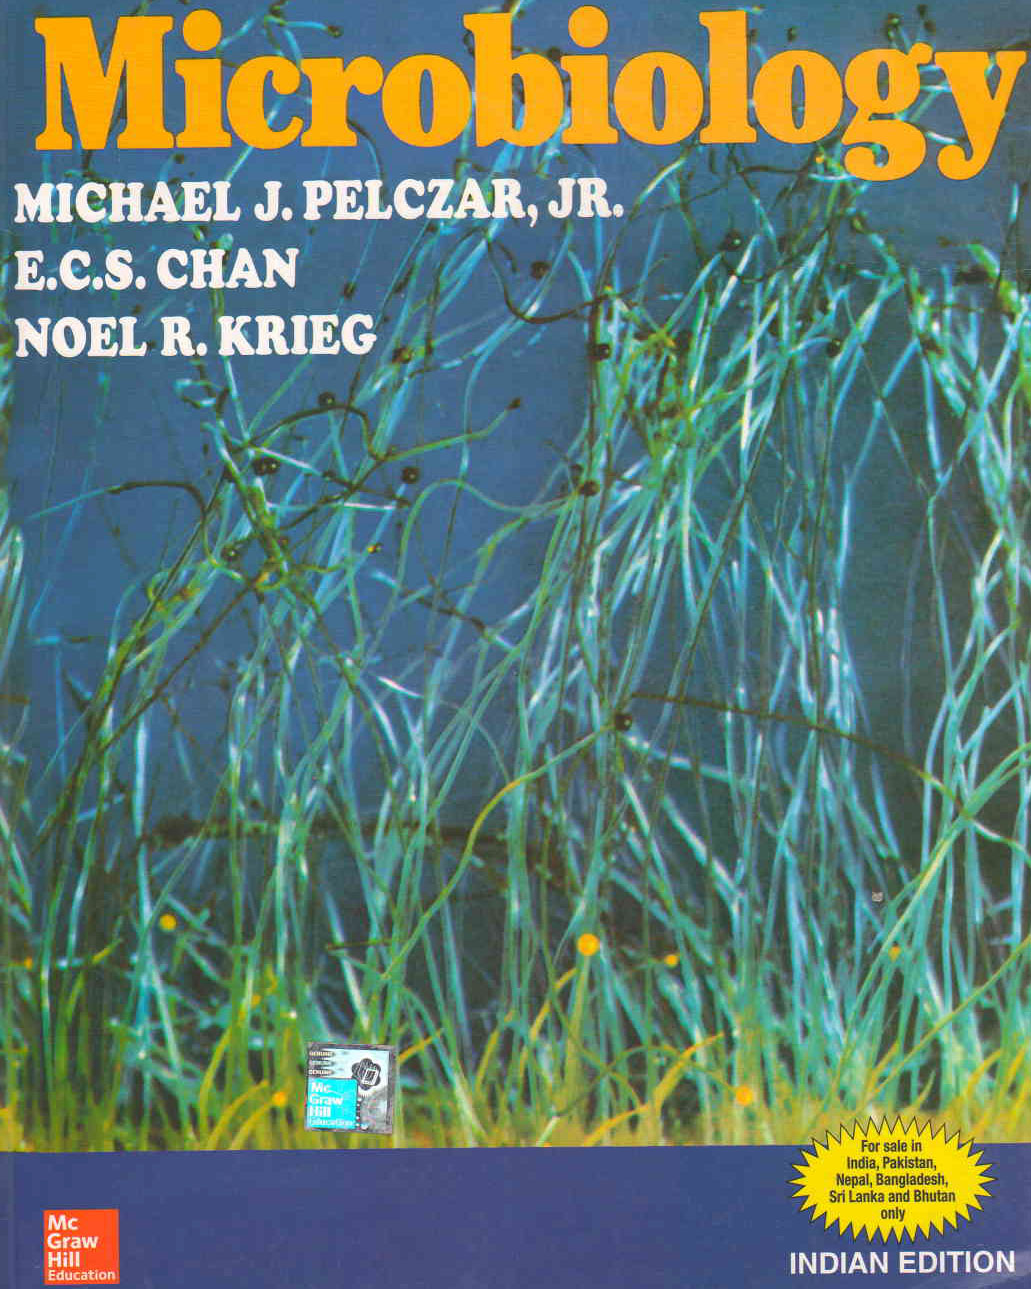 pelczar microbiology book 5th edition pdf free 130